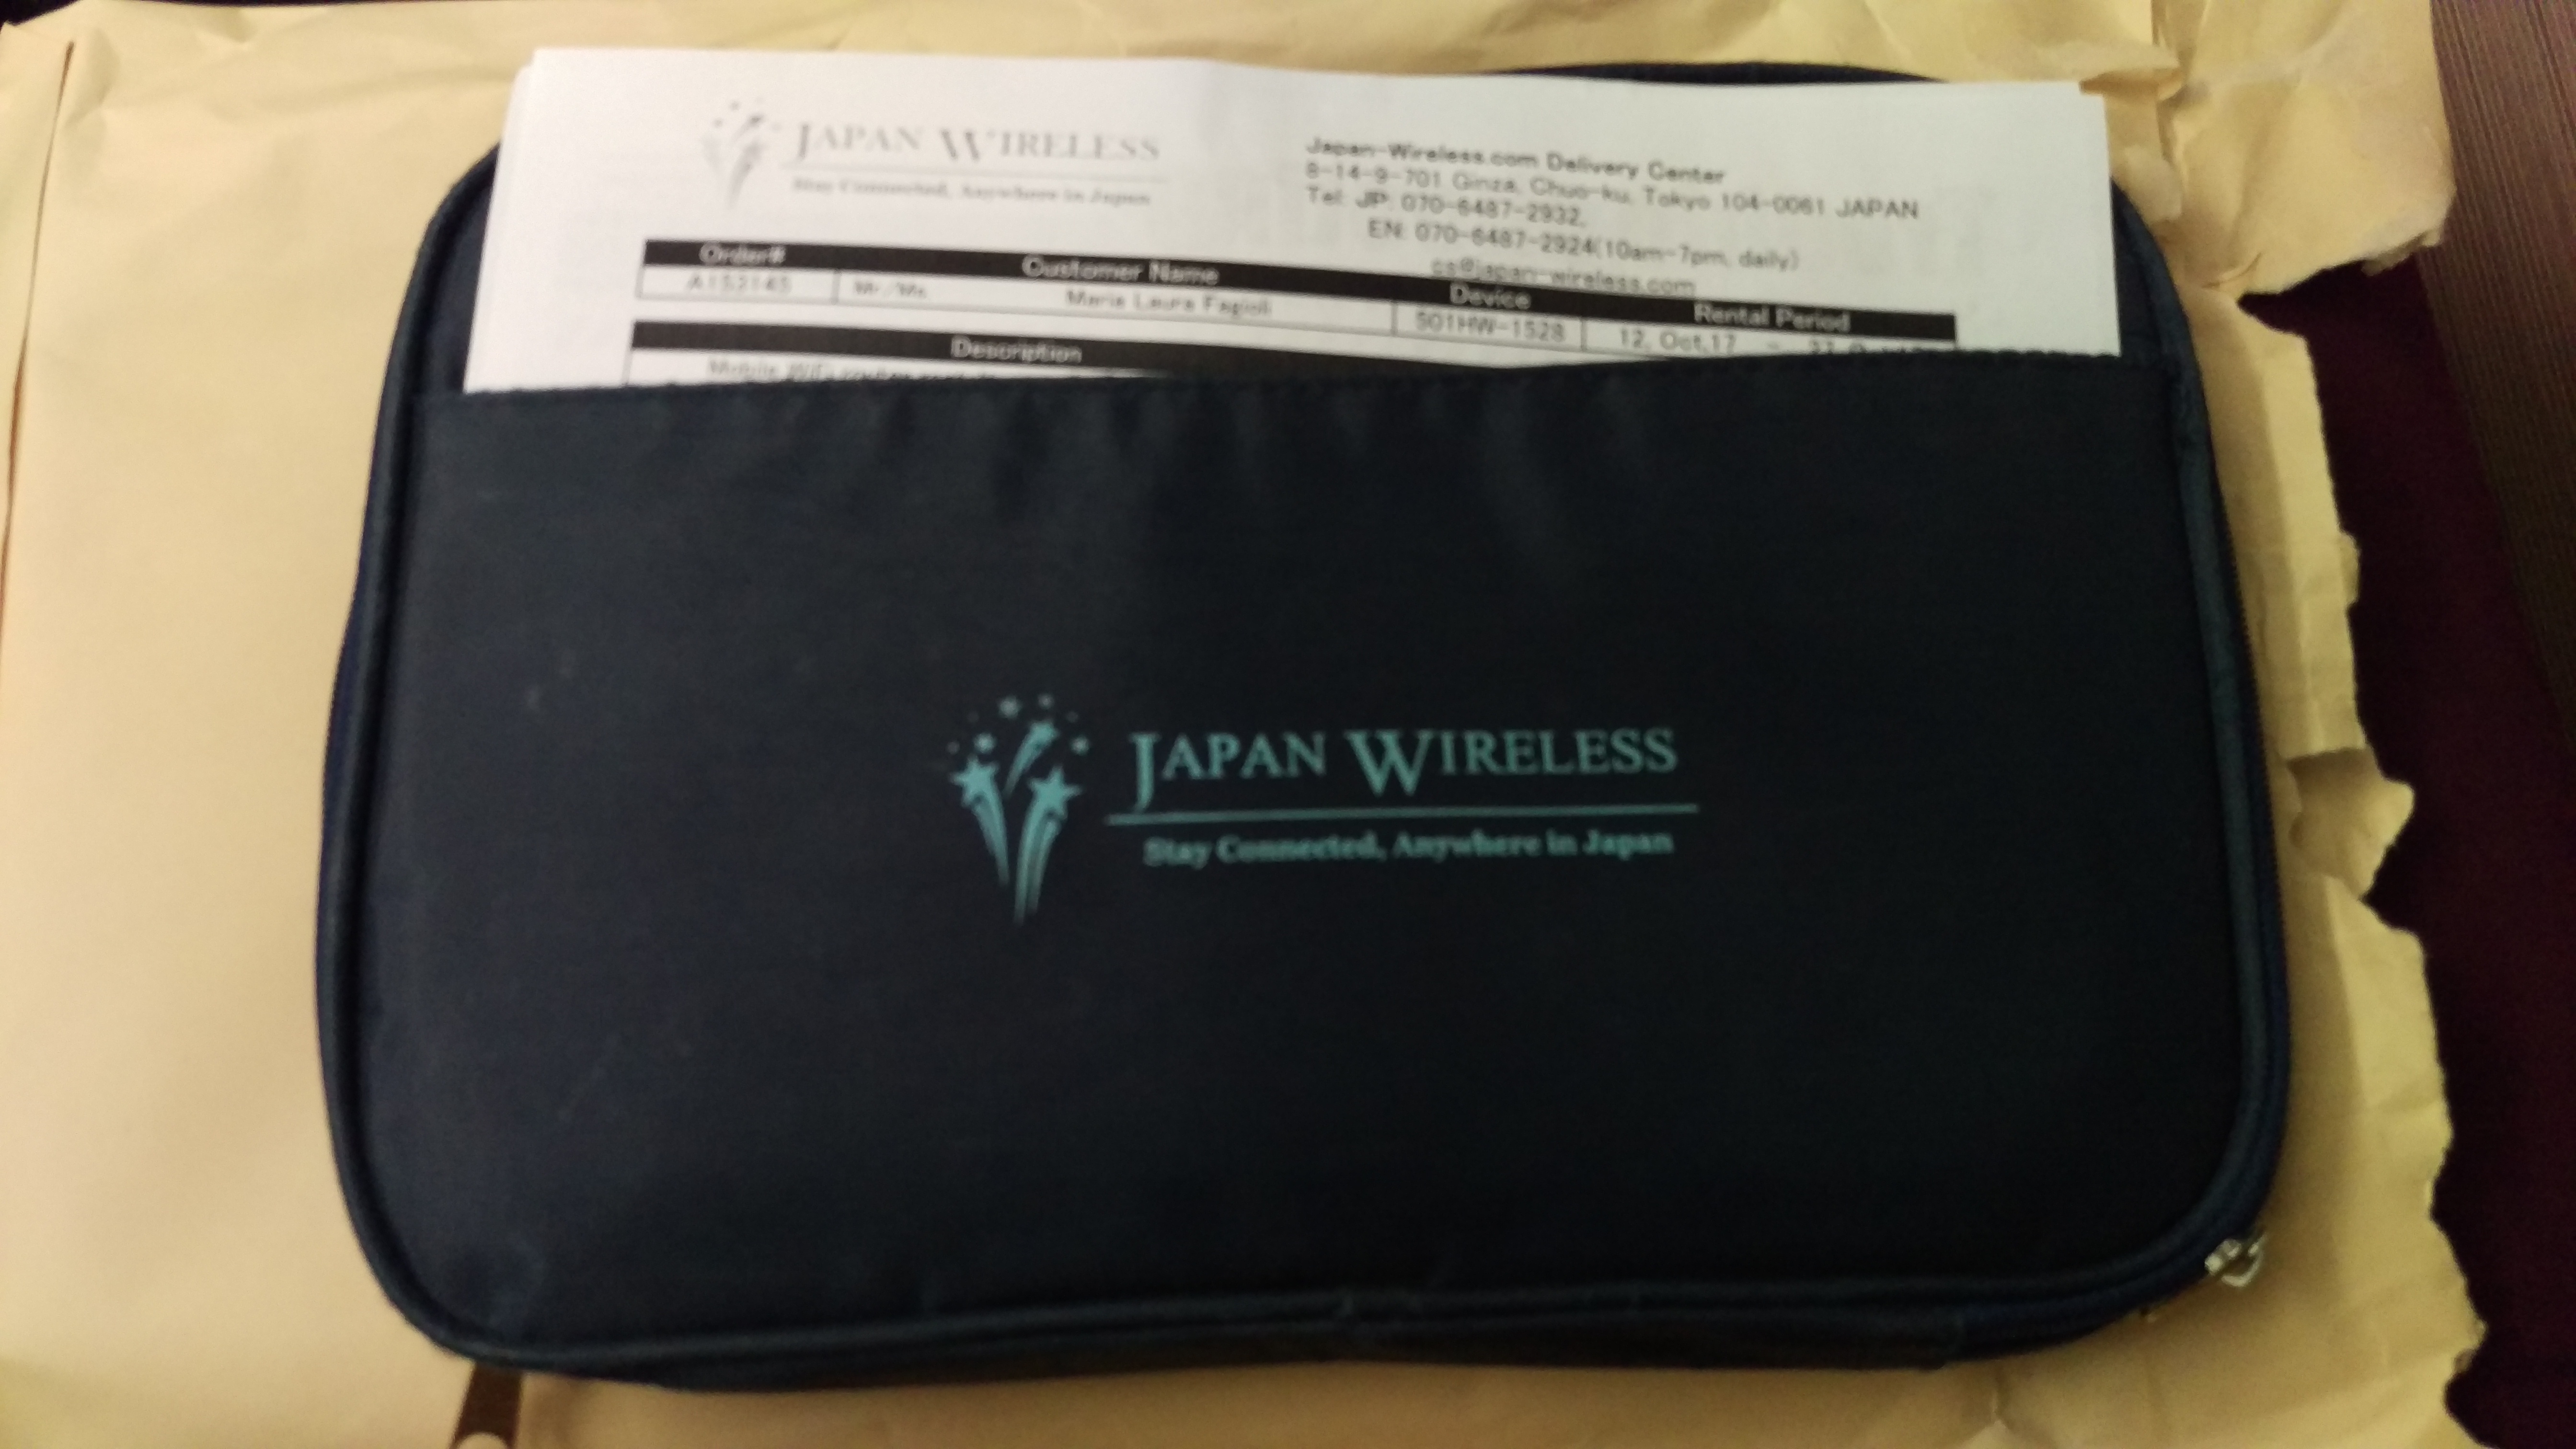 Il Japan Wireless, abbiamo internet!!!